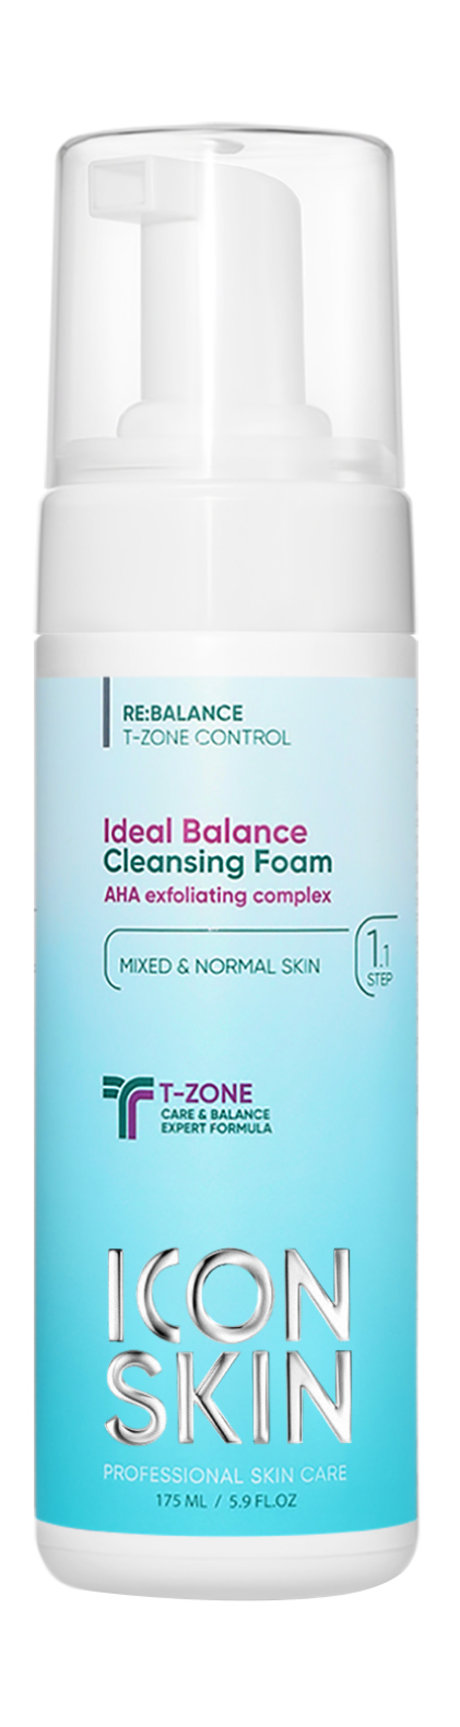 icon skin re:balance ideal balance cleansing foam